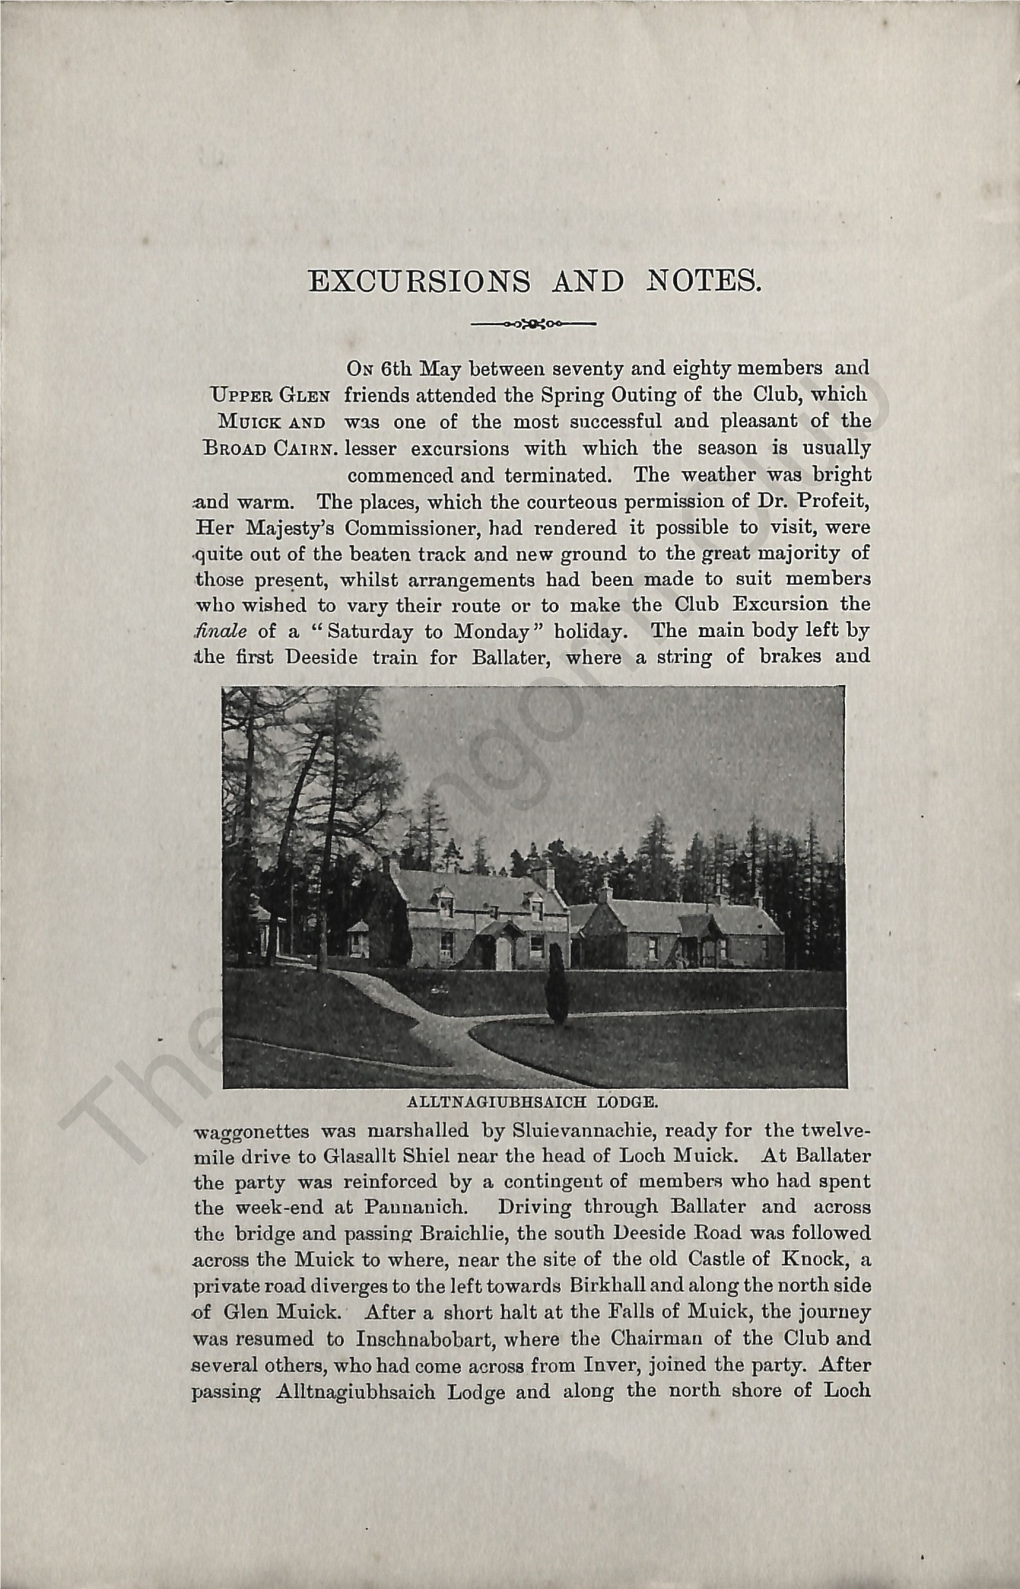 The Cairngorm Club Journal 007, 1896